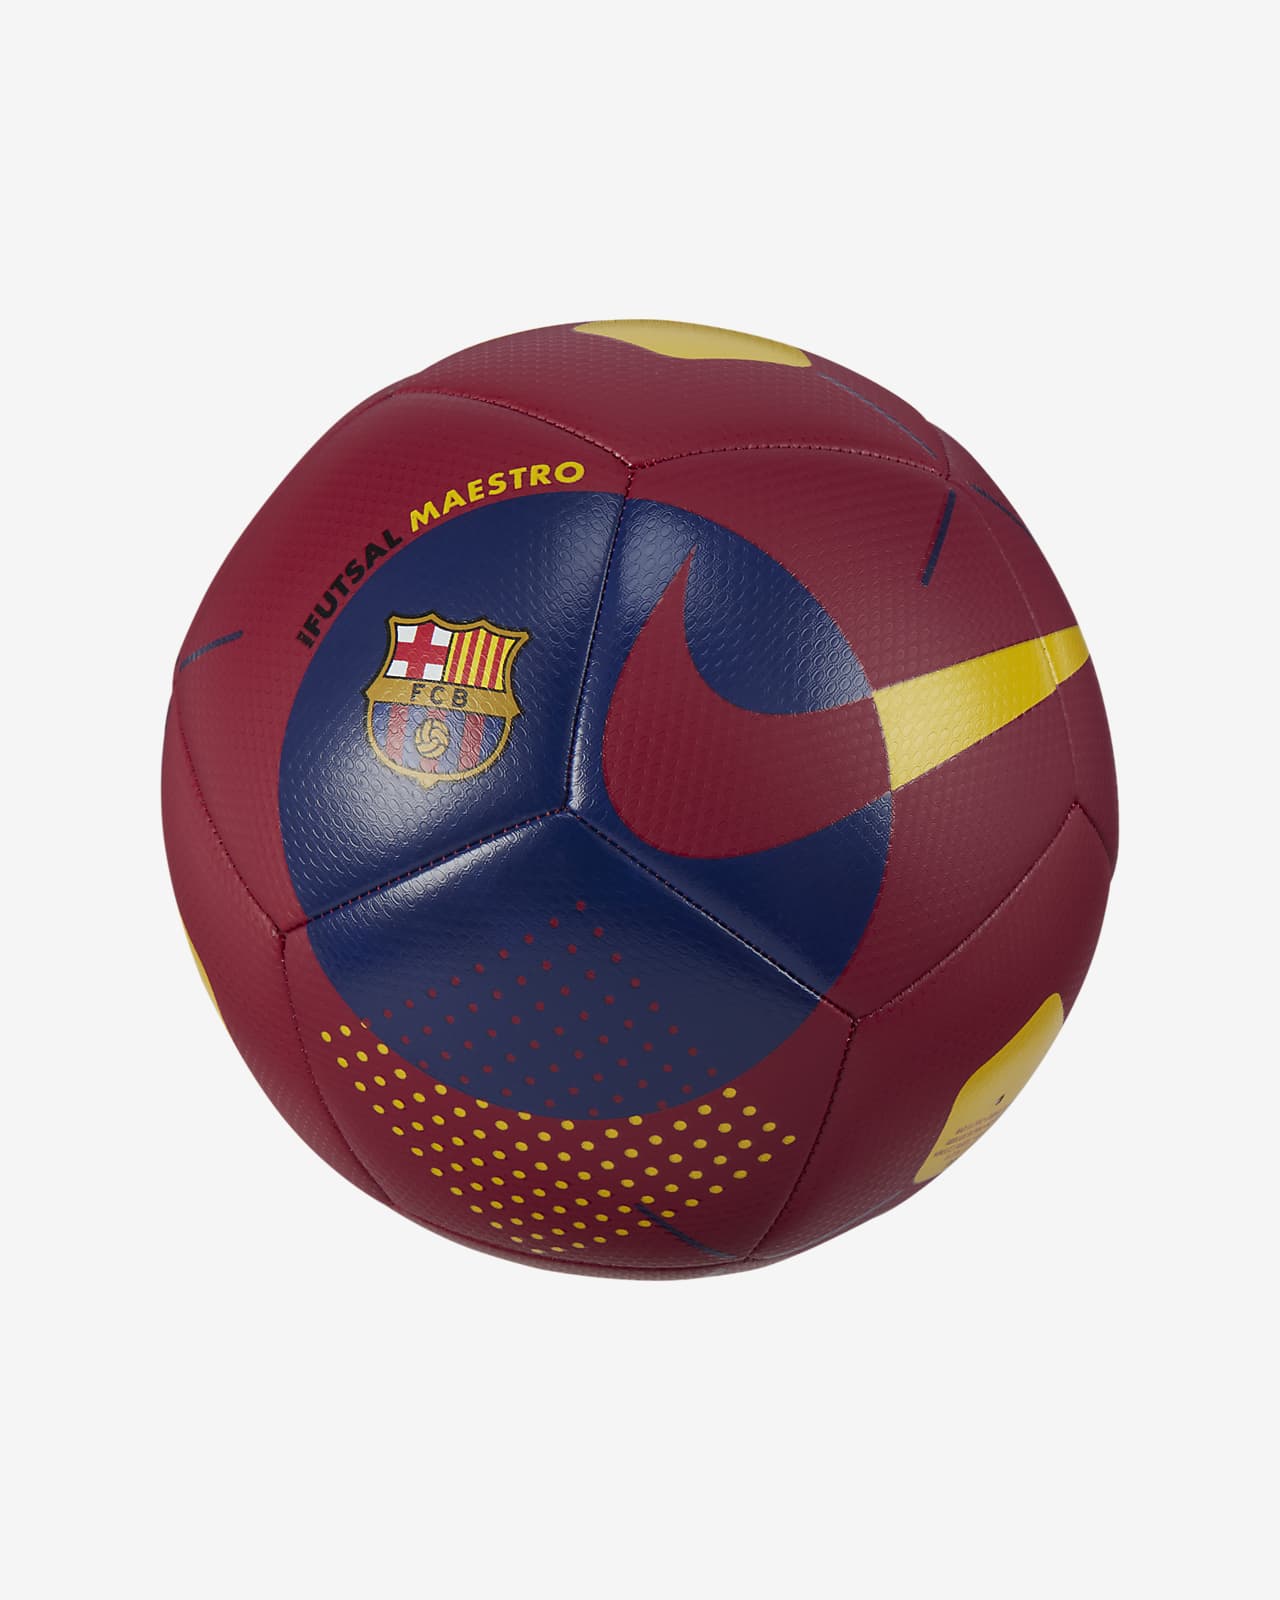 FC Barcelona Futsal Maestro-fodbold